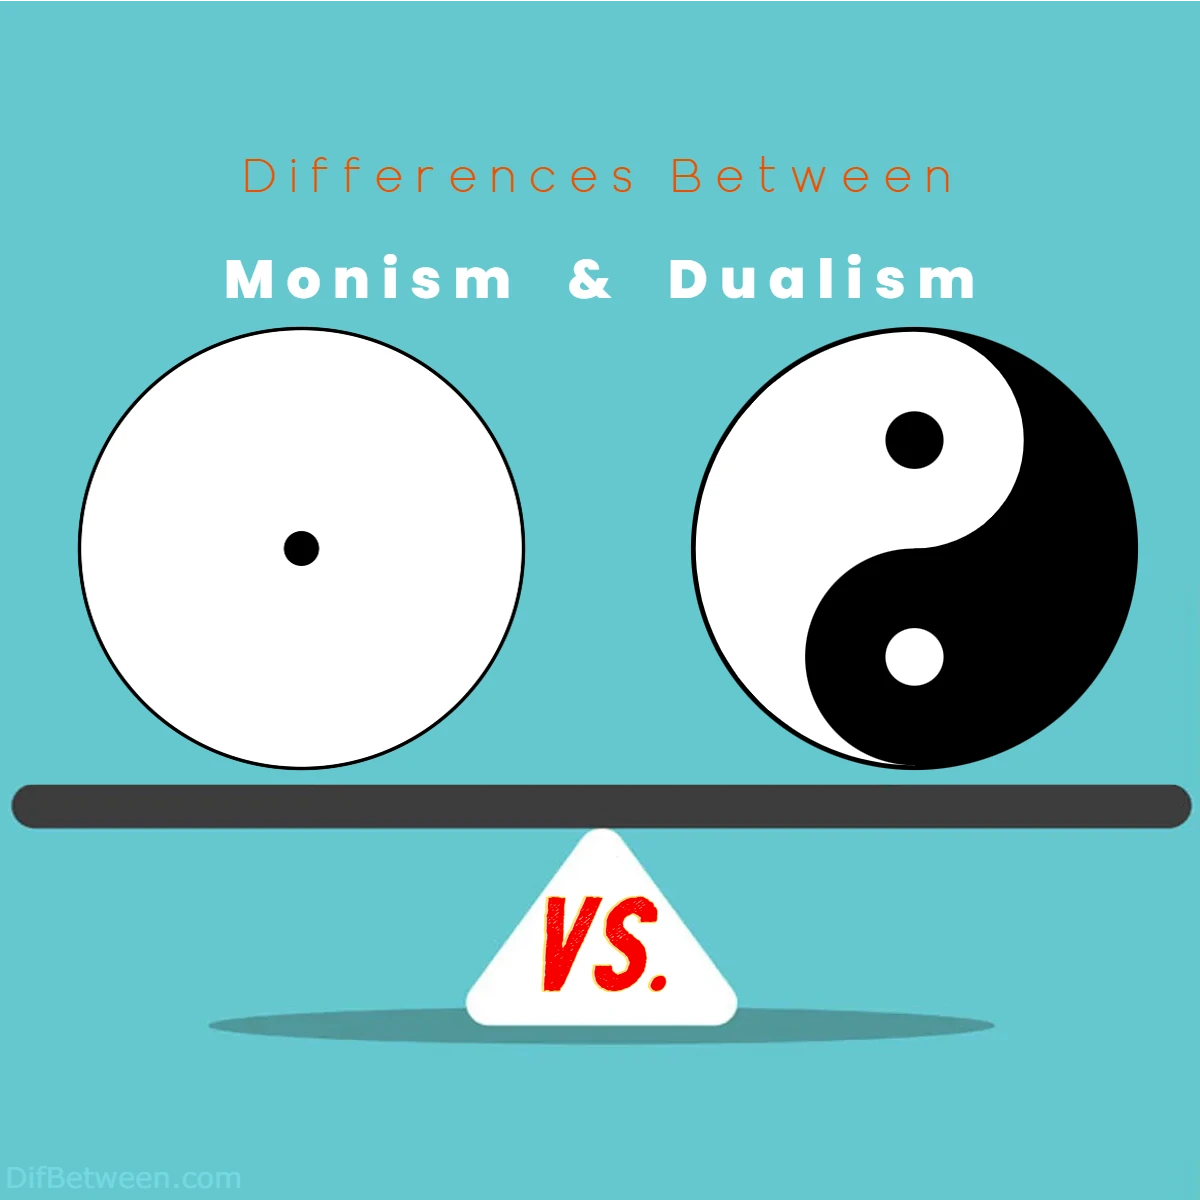 Differences Between Monism vs Dualism